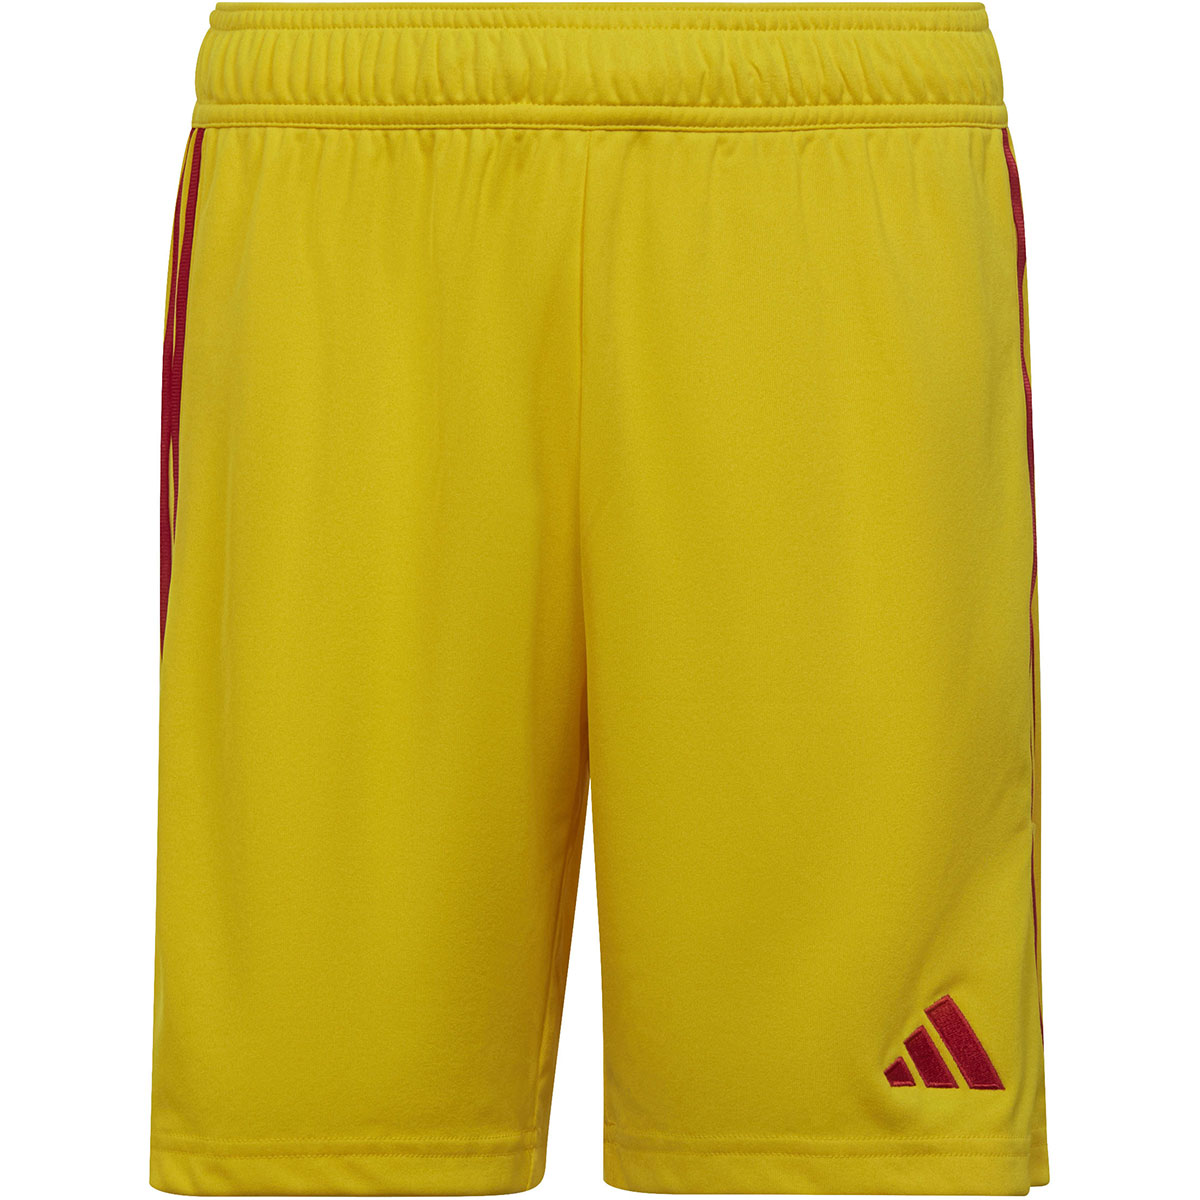 Adidas Kinder Shorts Tiro 23 gelb-rot